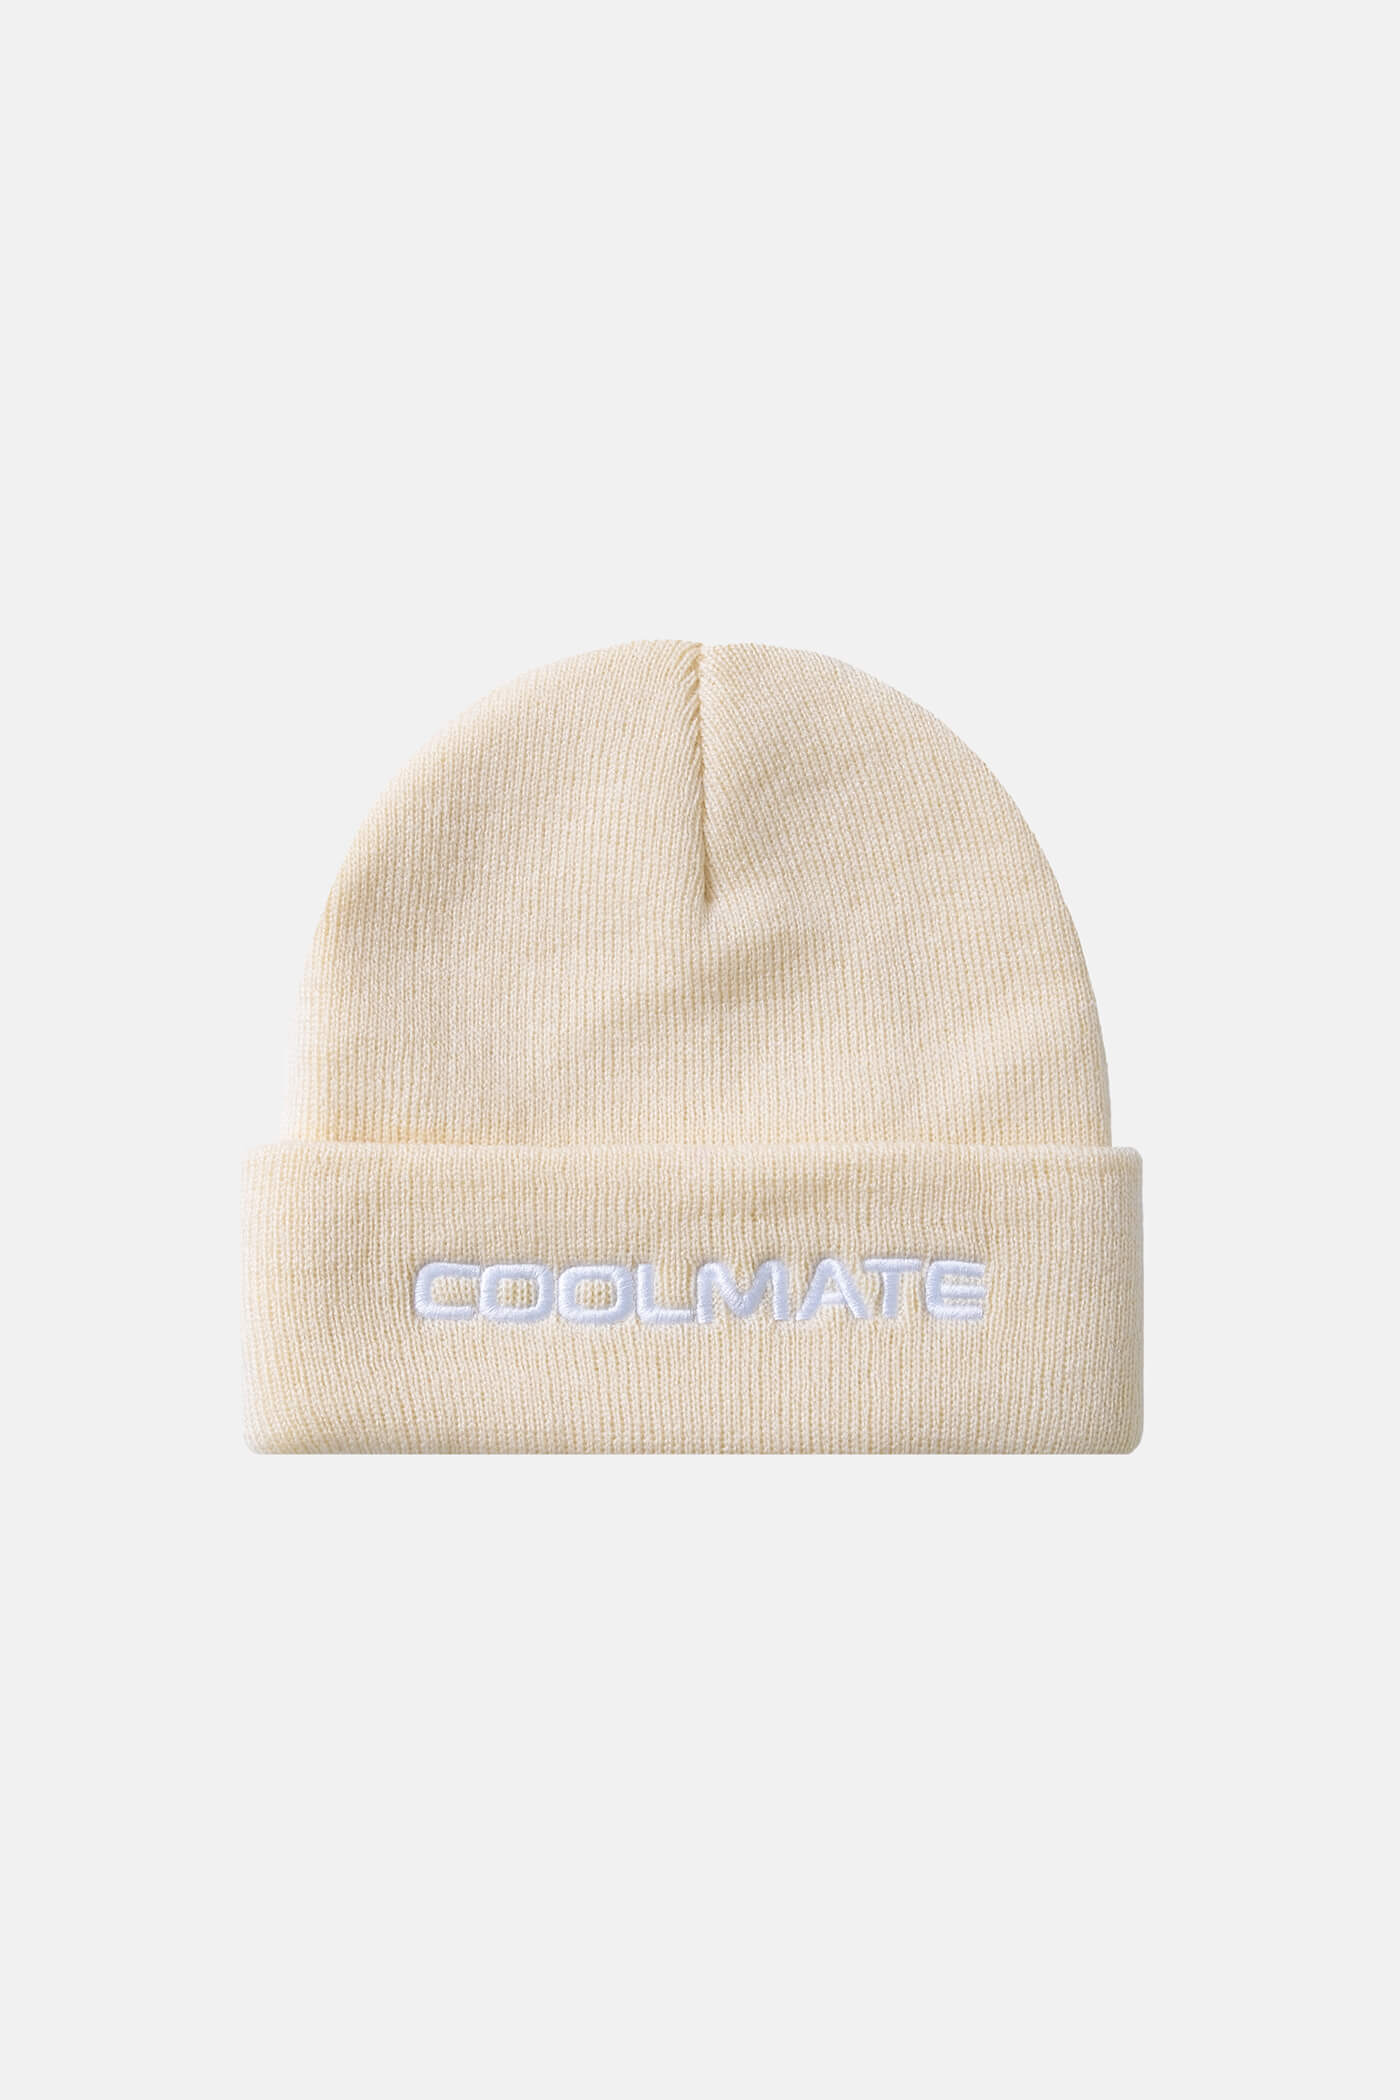 Mũ len thêu logo Coolmate Kem